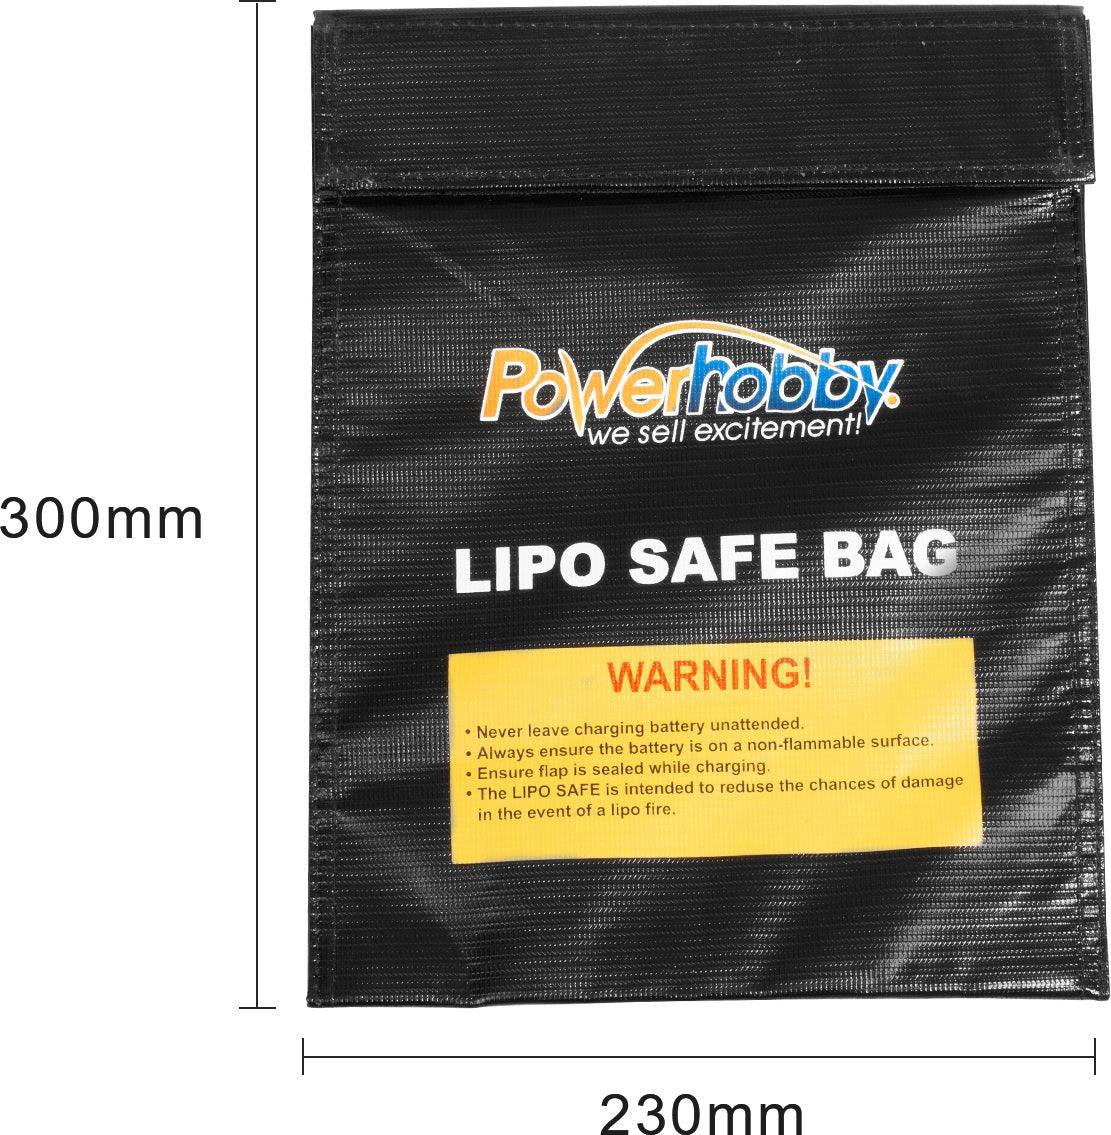 Powerhobby Large Lipo / Sack Bag - PowerHobby